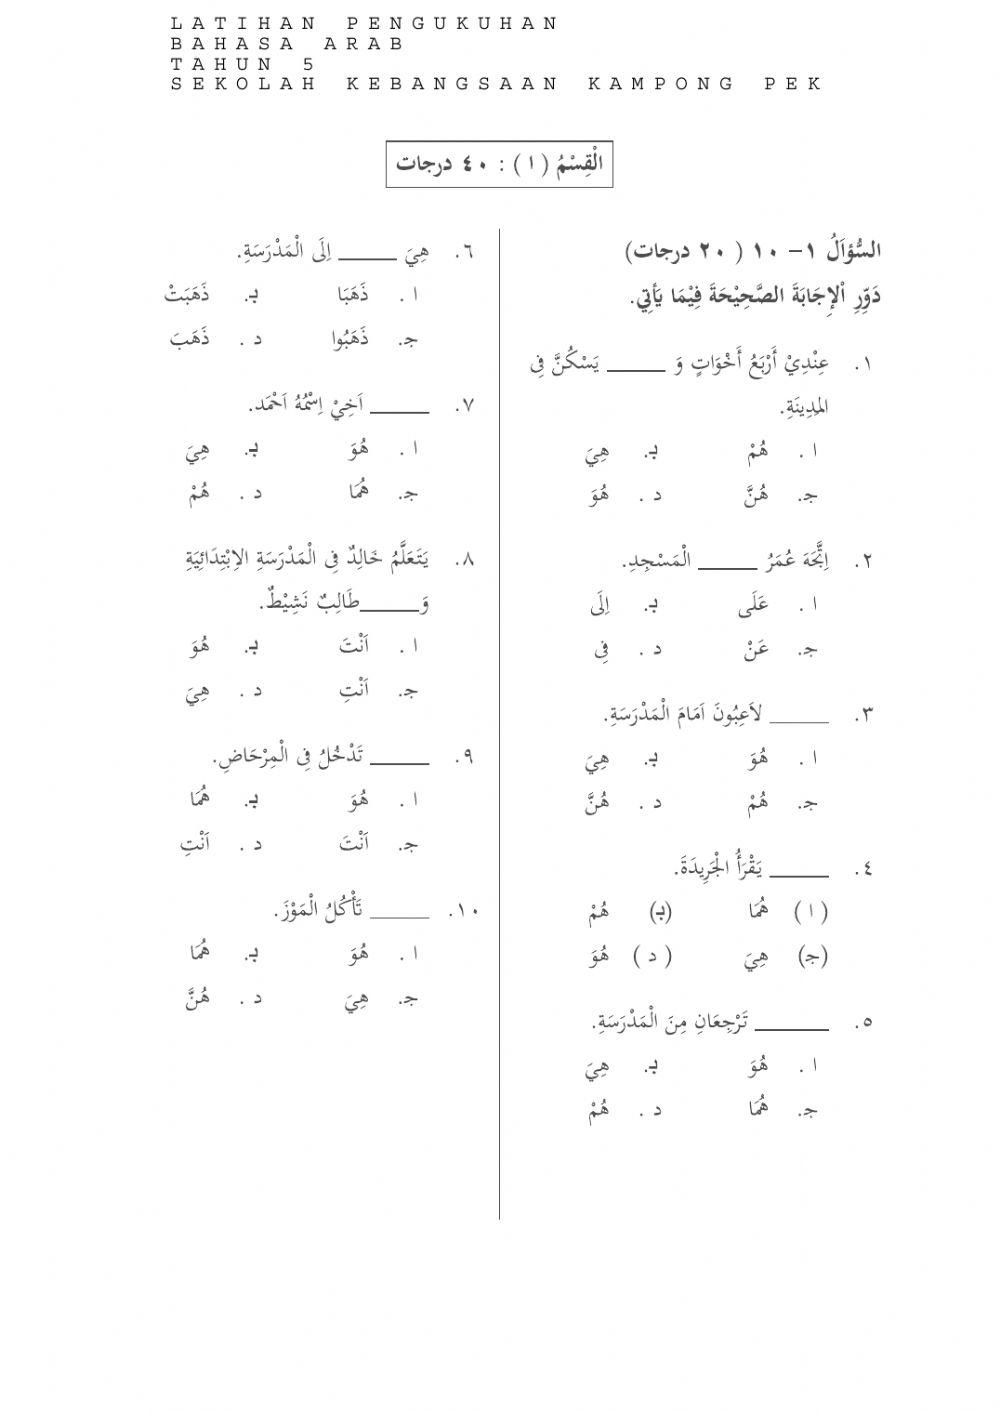 Latihan Pengukuhan Bahasa Arab UPKK 2